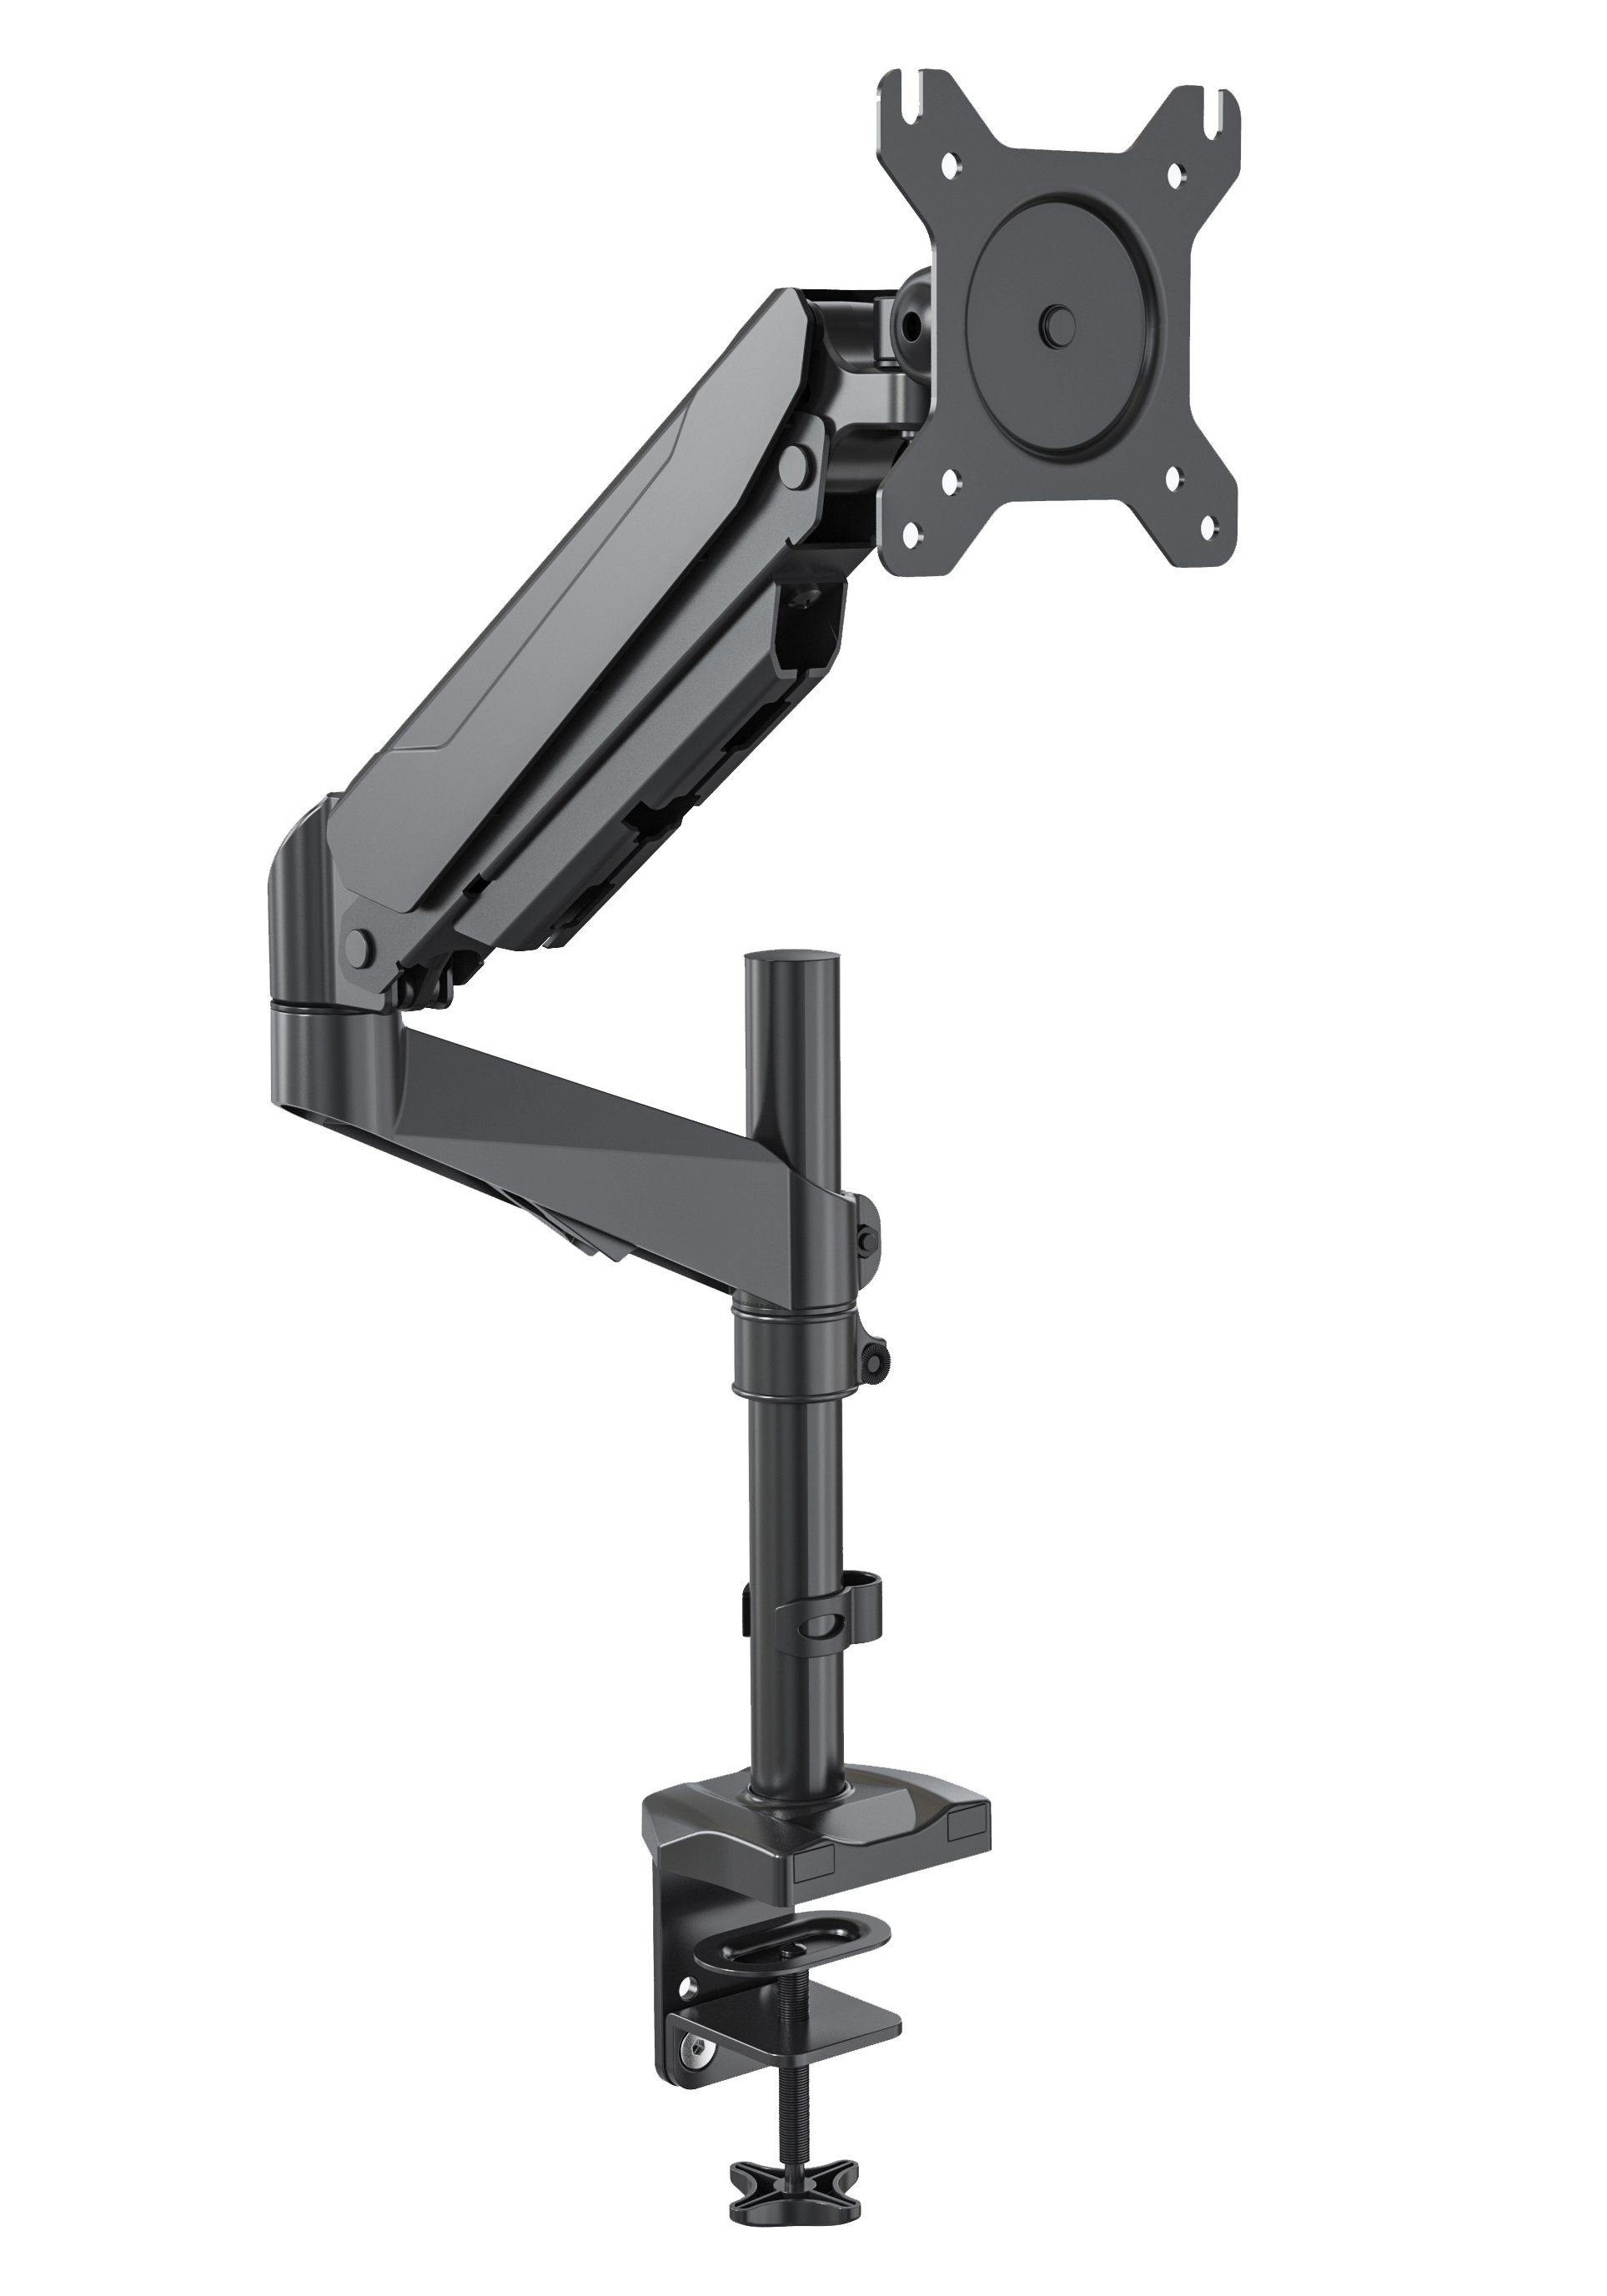  Gas Spring DeskClamp & Grommet Single LCD Monitor Arm Support up to 32'';8kg; Tilt;Swivel;Rotate; VESA 75/100  